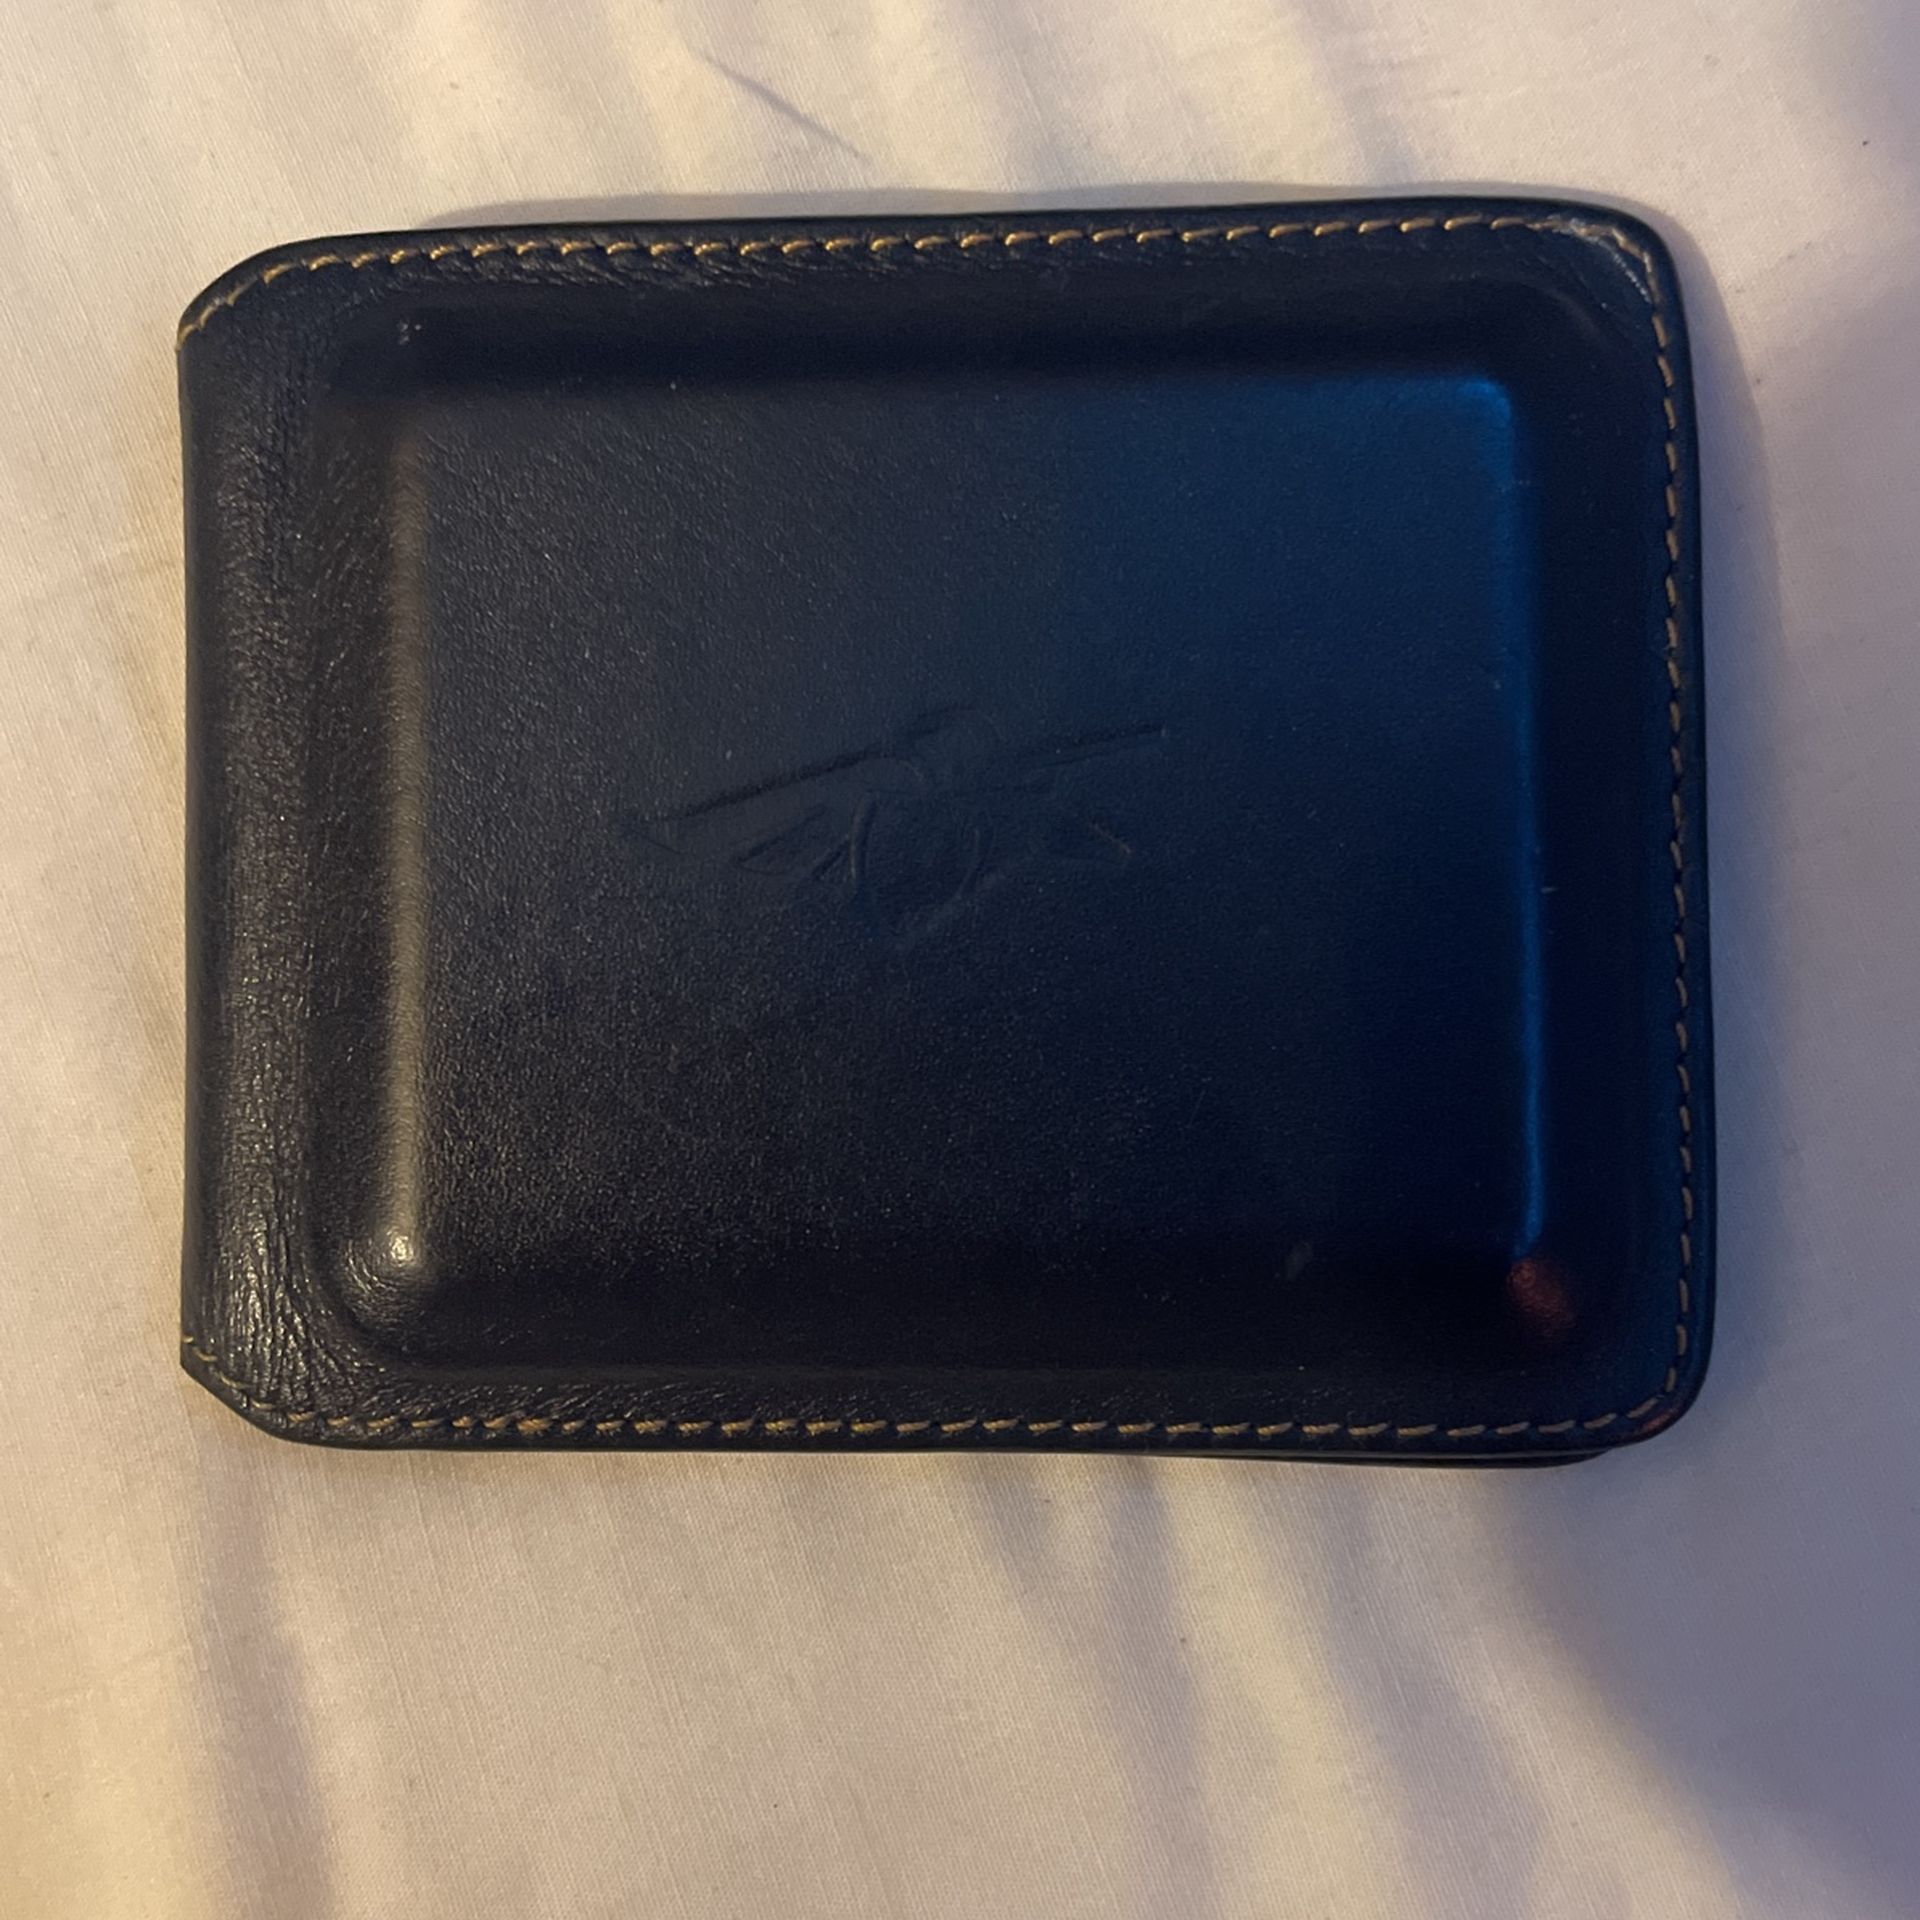 Volterman Smart Bi-Fold Wallet